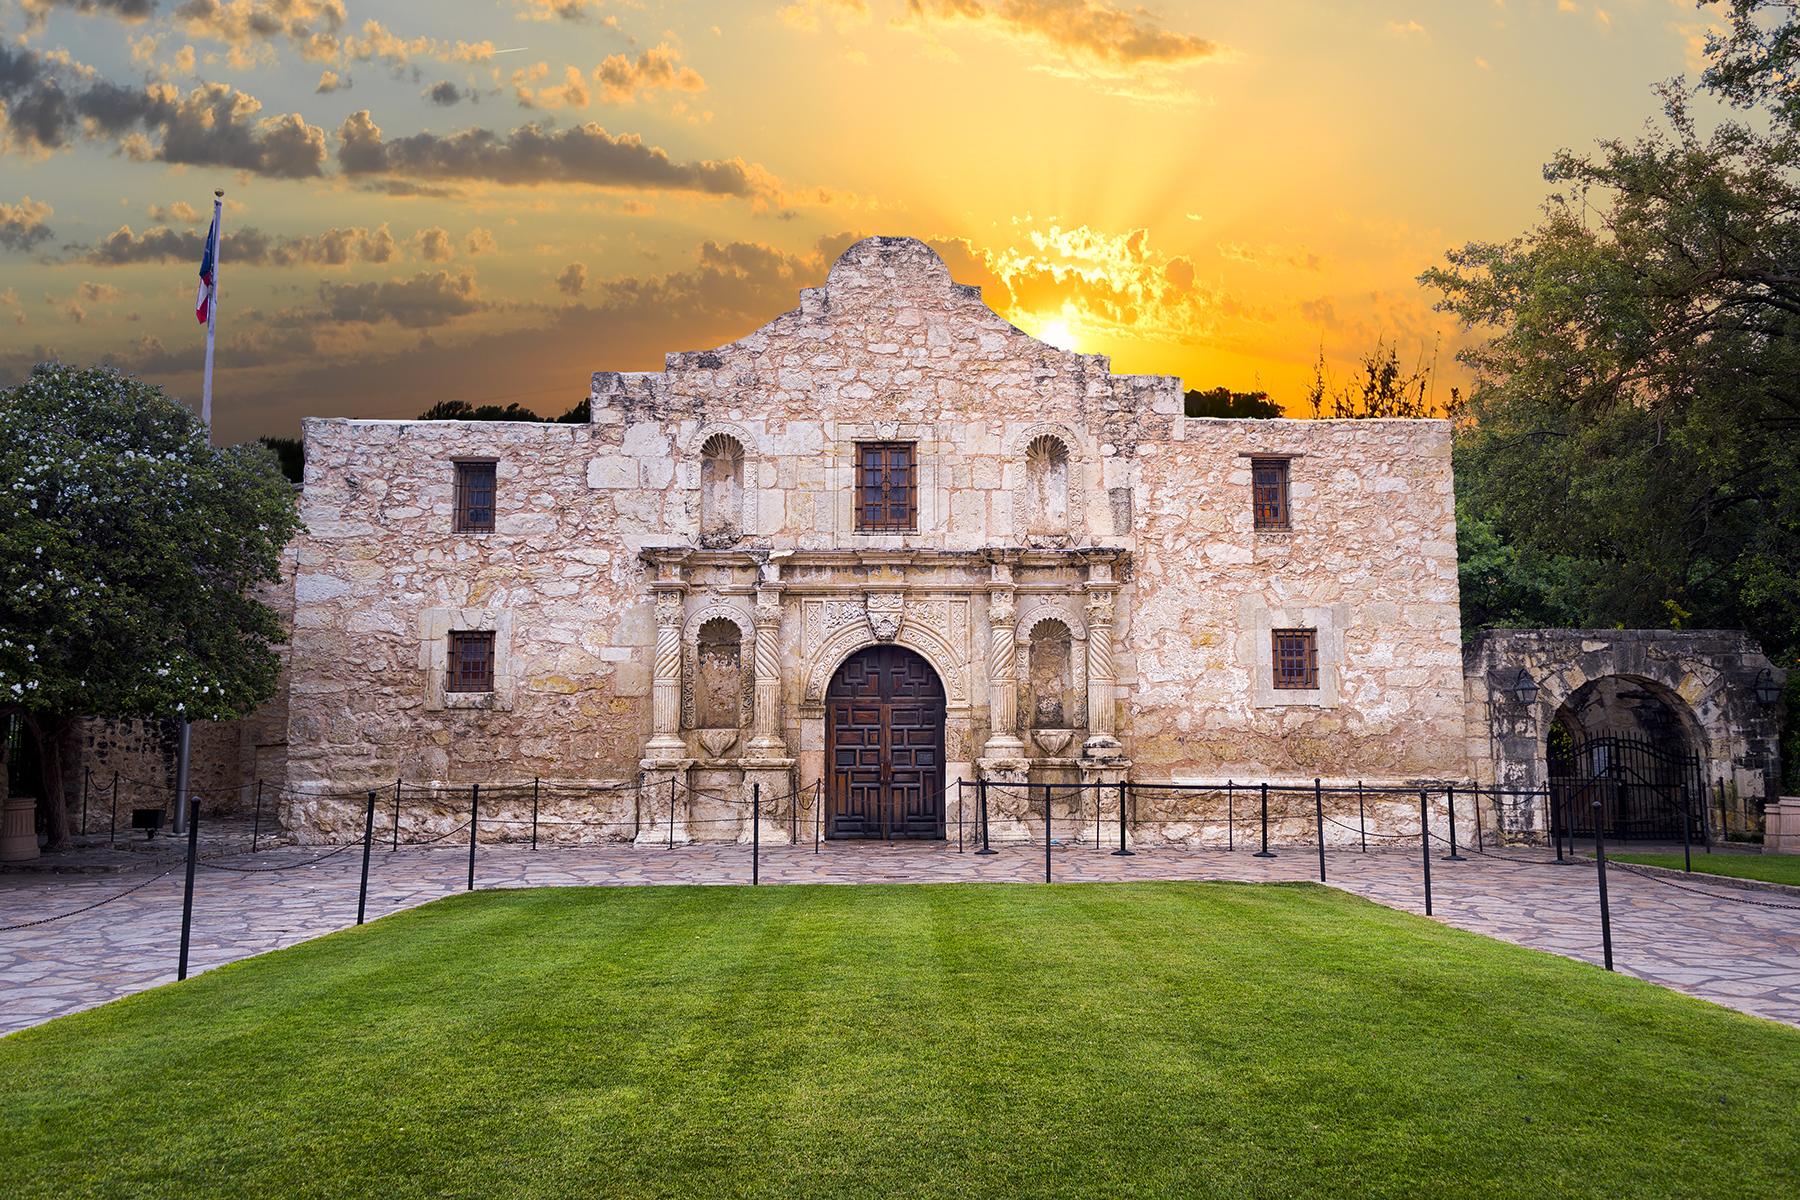 A beautiful sunset shot of San Antonio's Alamo